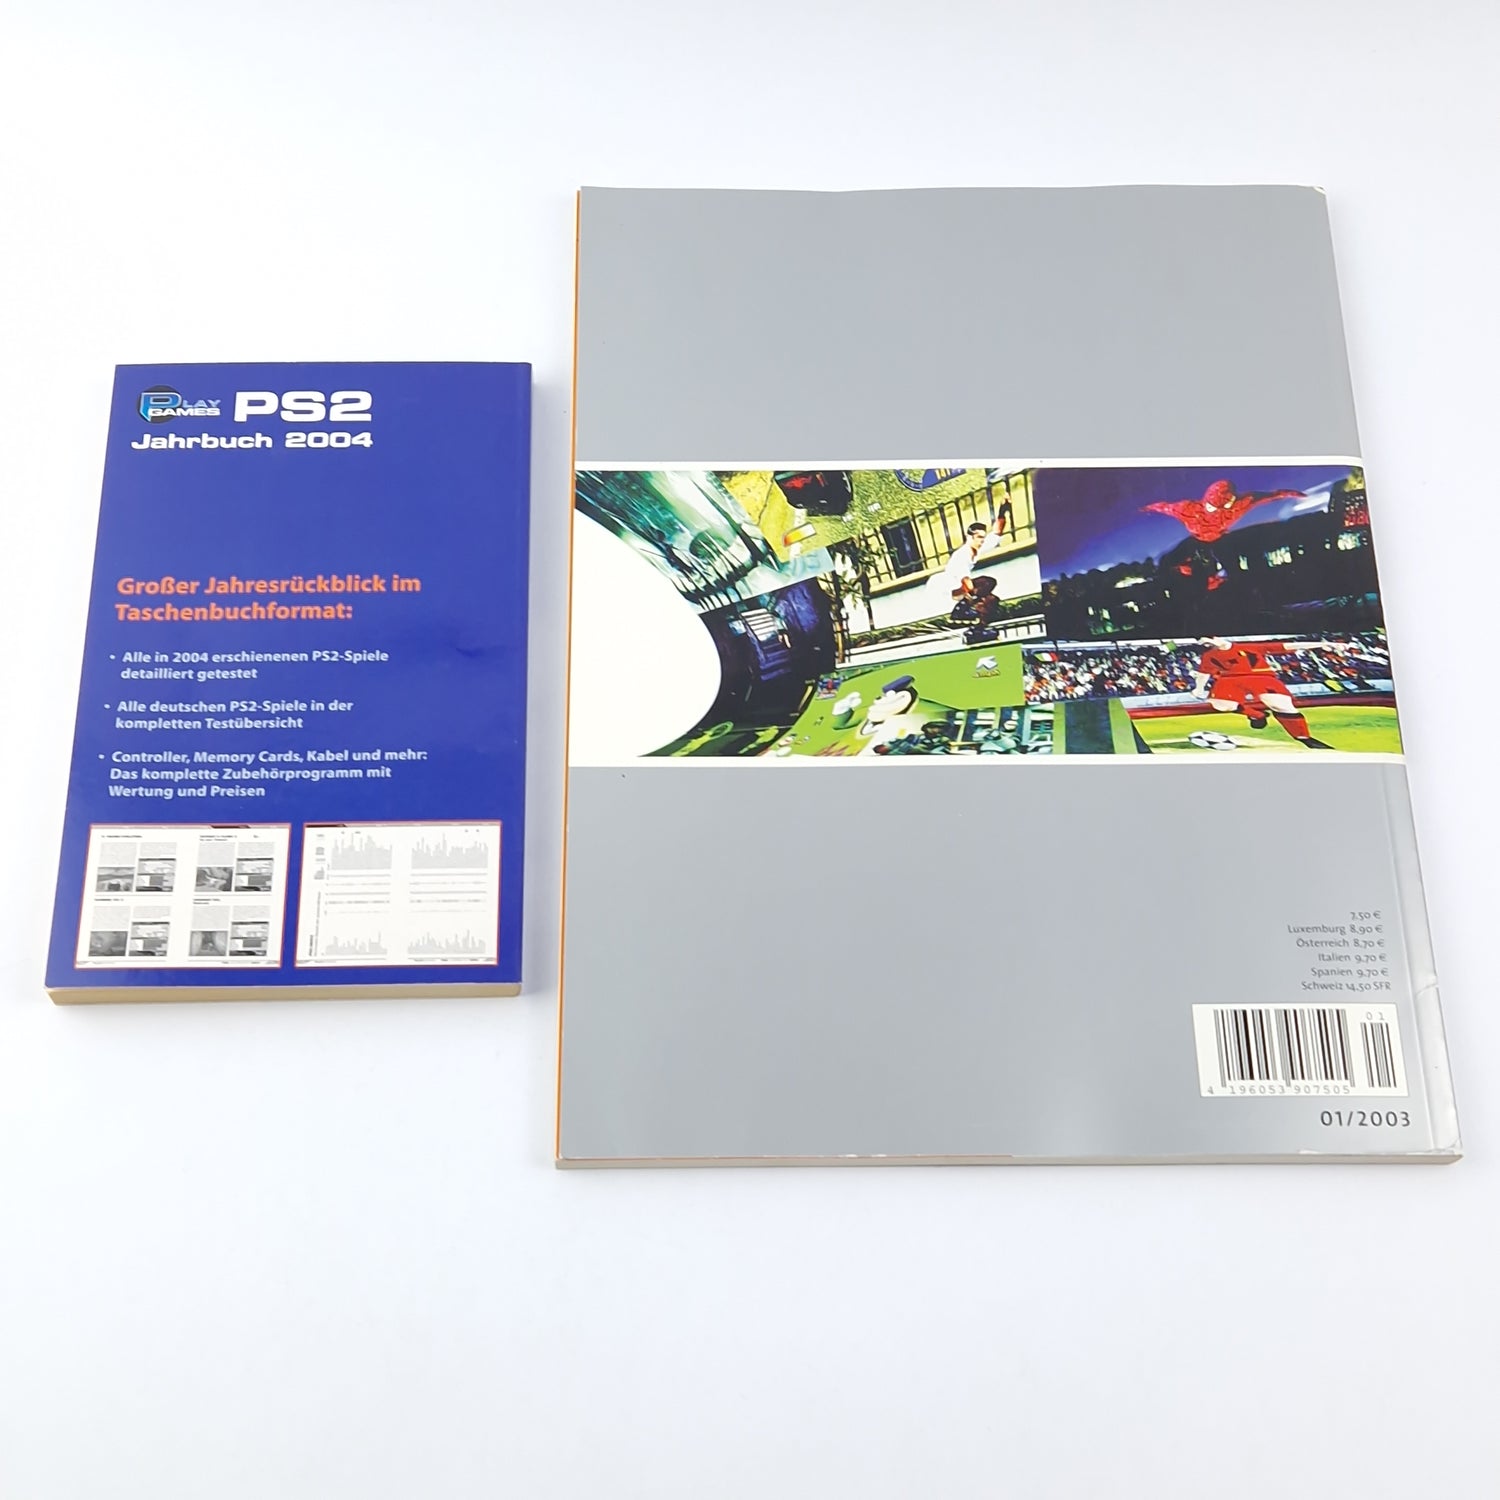 Playstation PS2 Jahrbuch 2002 & Jahrbuch 2004 Jahresrückblick Magazin